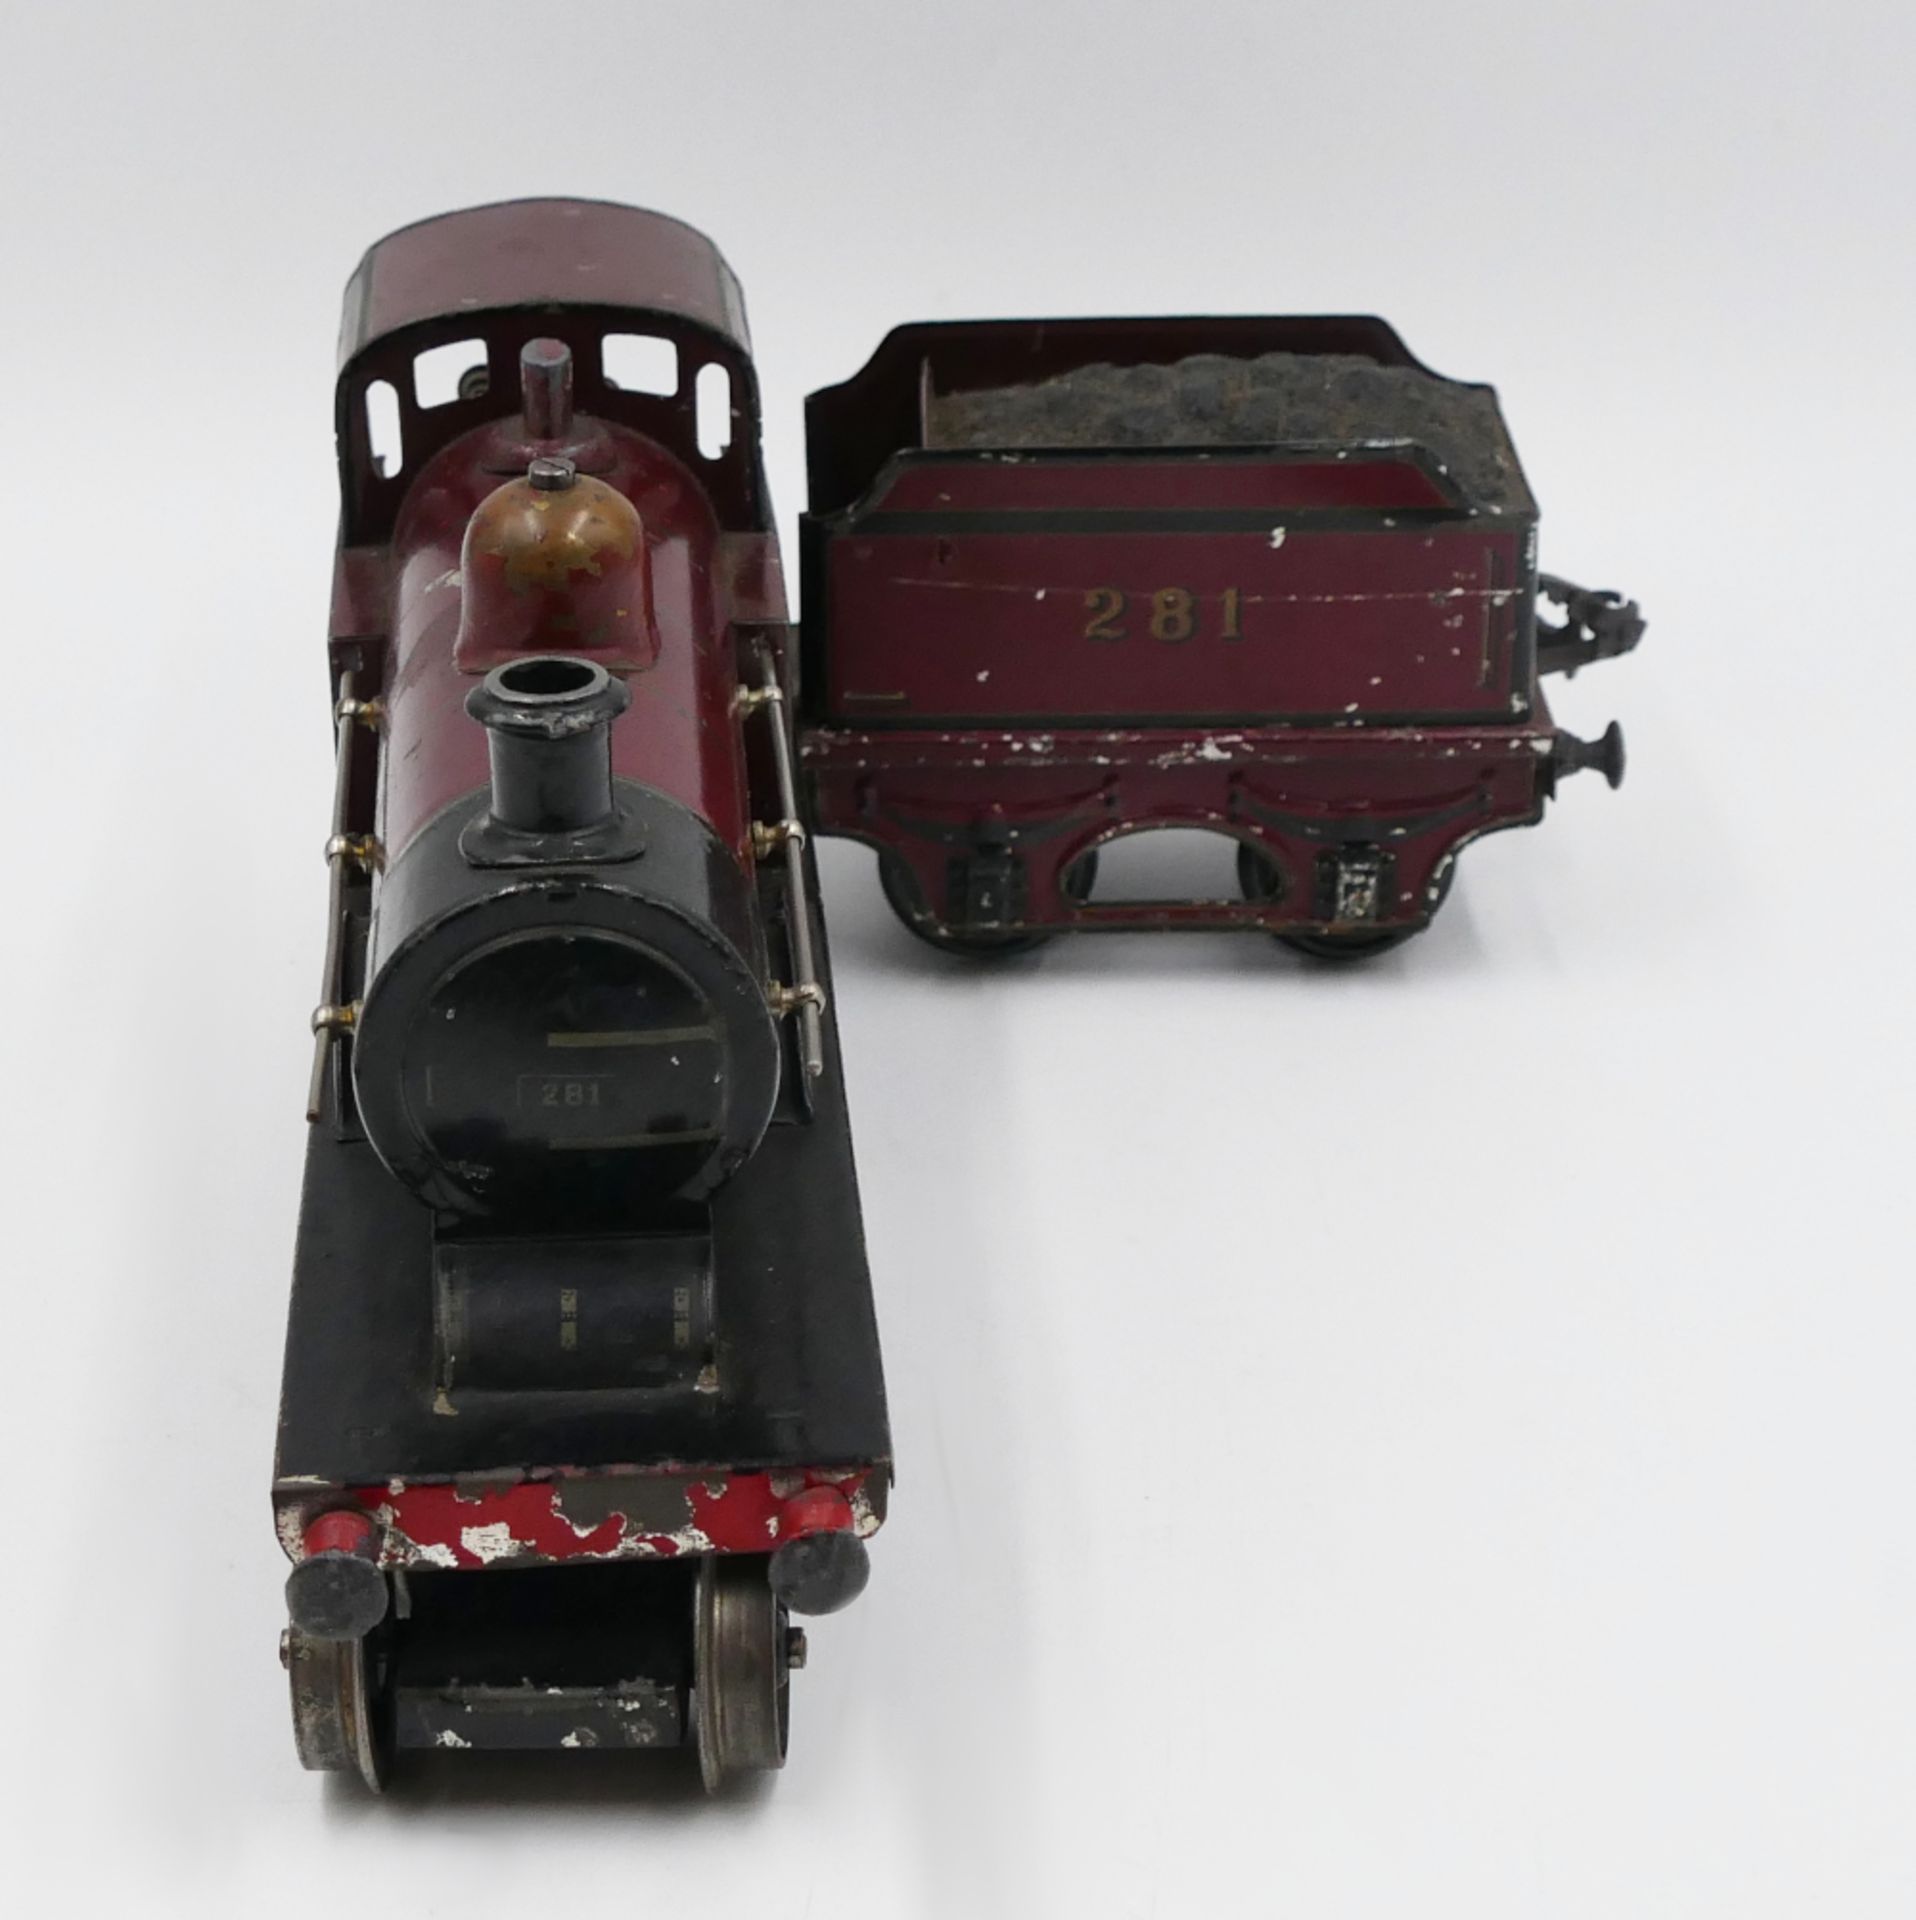 1 Dampflokomotive Anfang 20. Jh. MÄRKLIN wohl "E1021MR", Spur 1, mit Schlepptender "281" je in Rotbr - Bild 3 aus 6